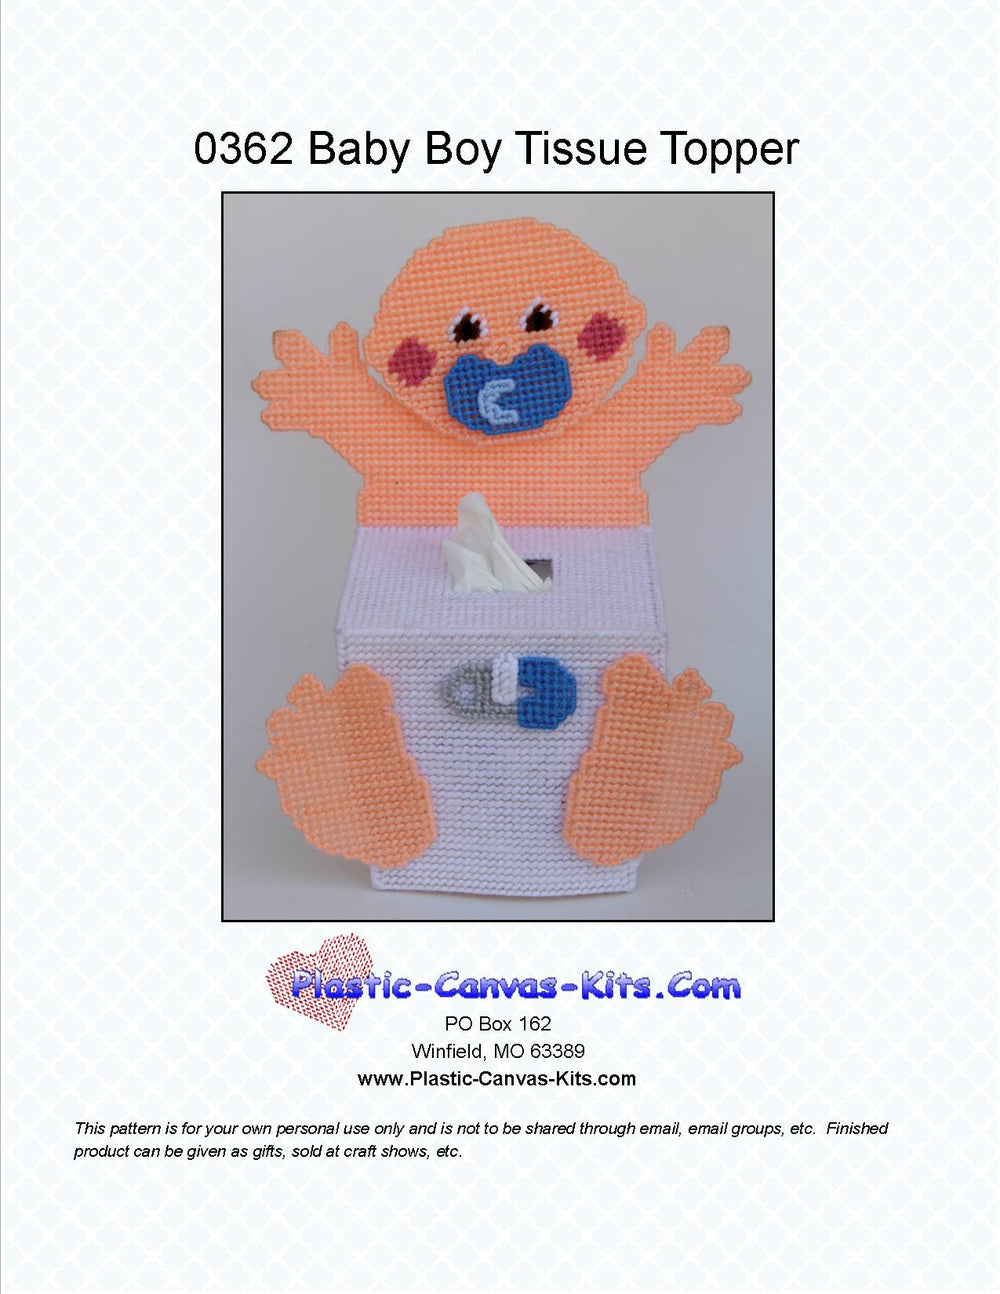 Baby Boy Tissue Topper